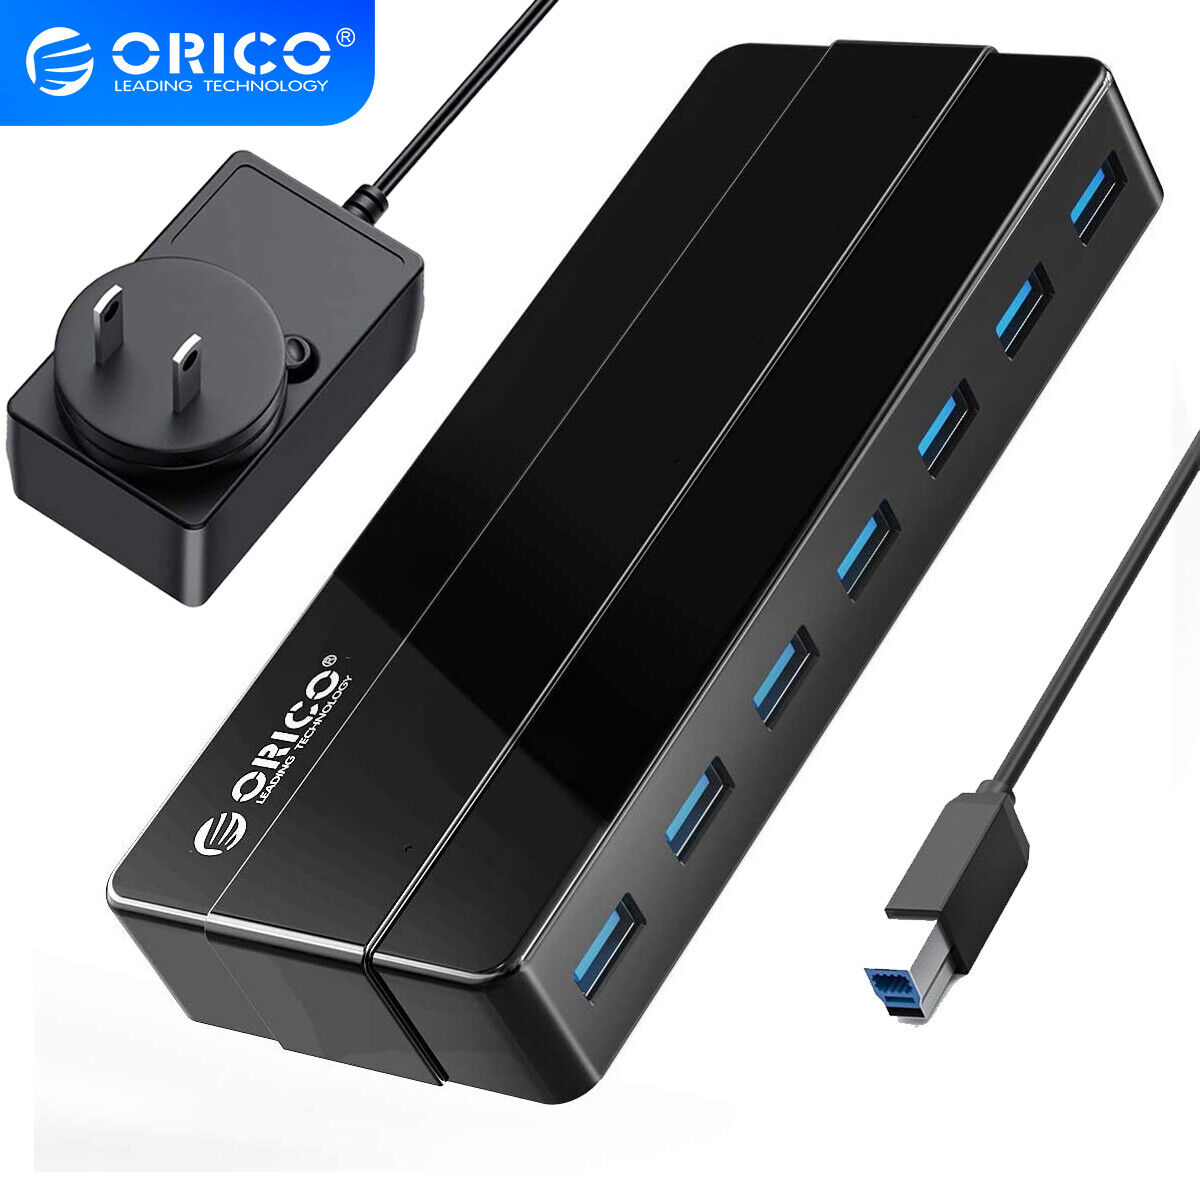 ORICO USB 3.0 HUB 7-Ports USB HUB 12V/2A Powered Adapter for PC Laptop Keyboard